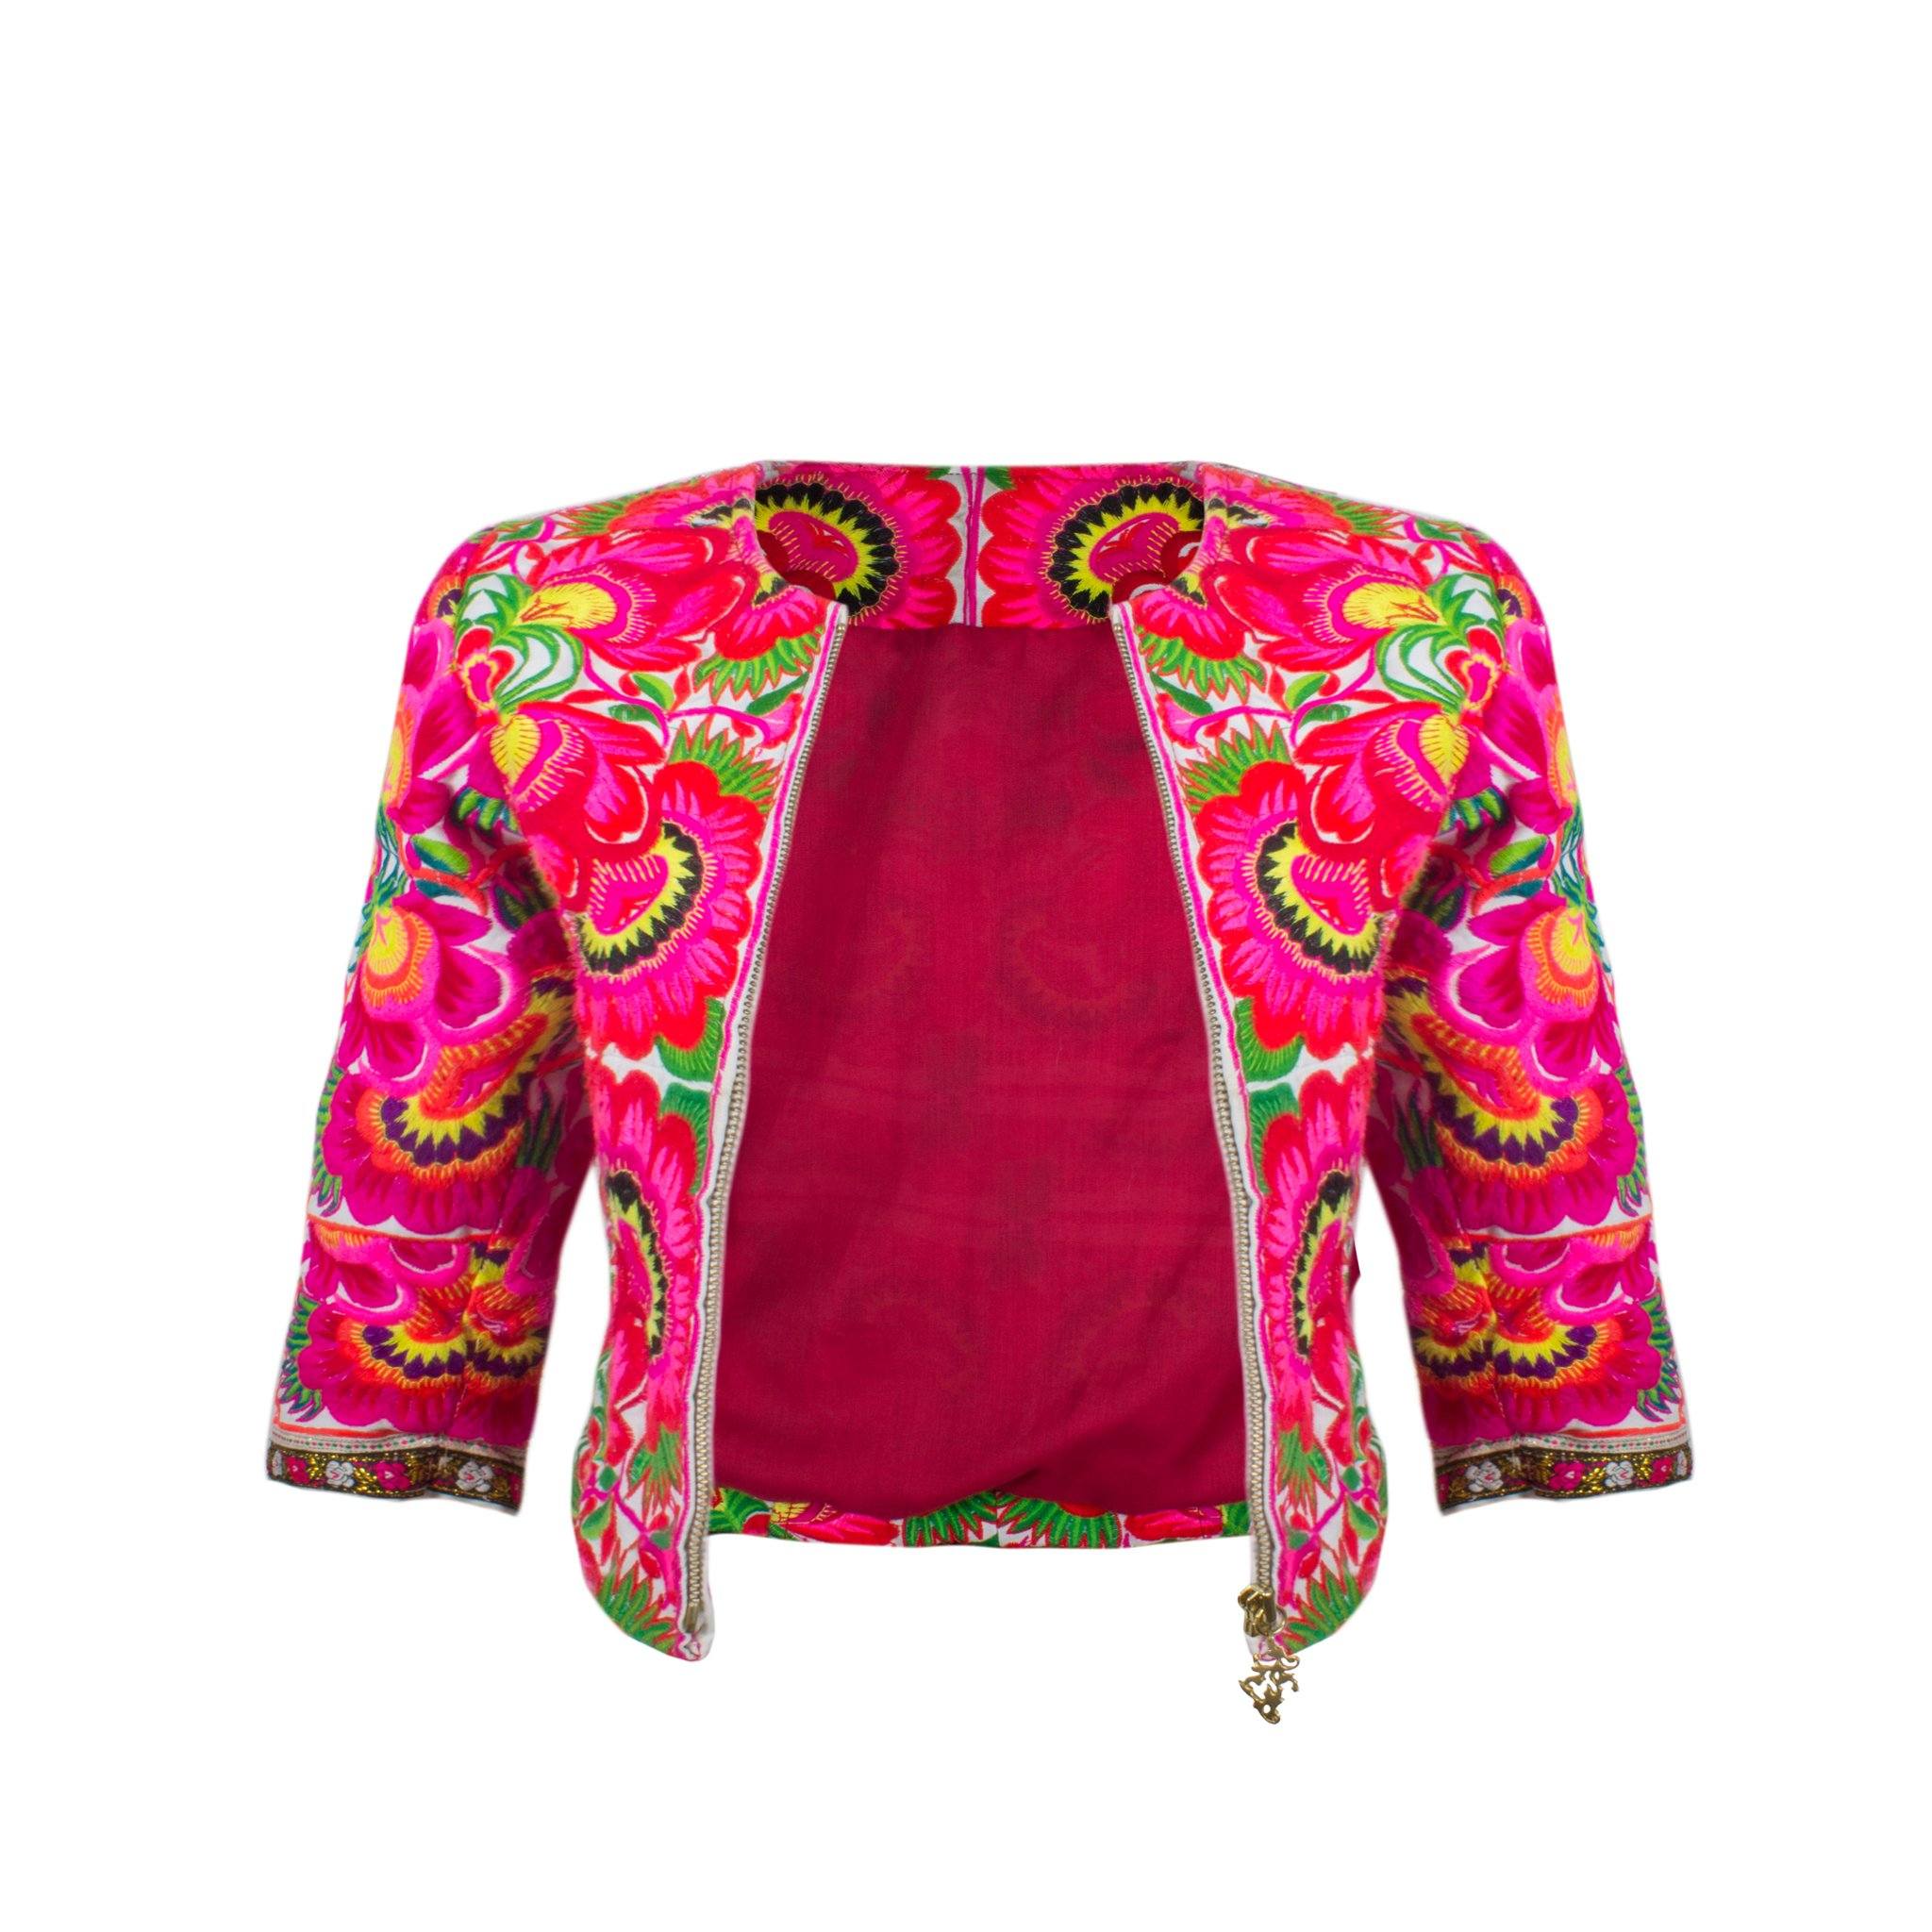 Fully Embroidered Bolero Jacket - Blumera